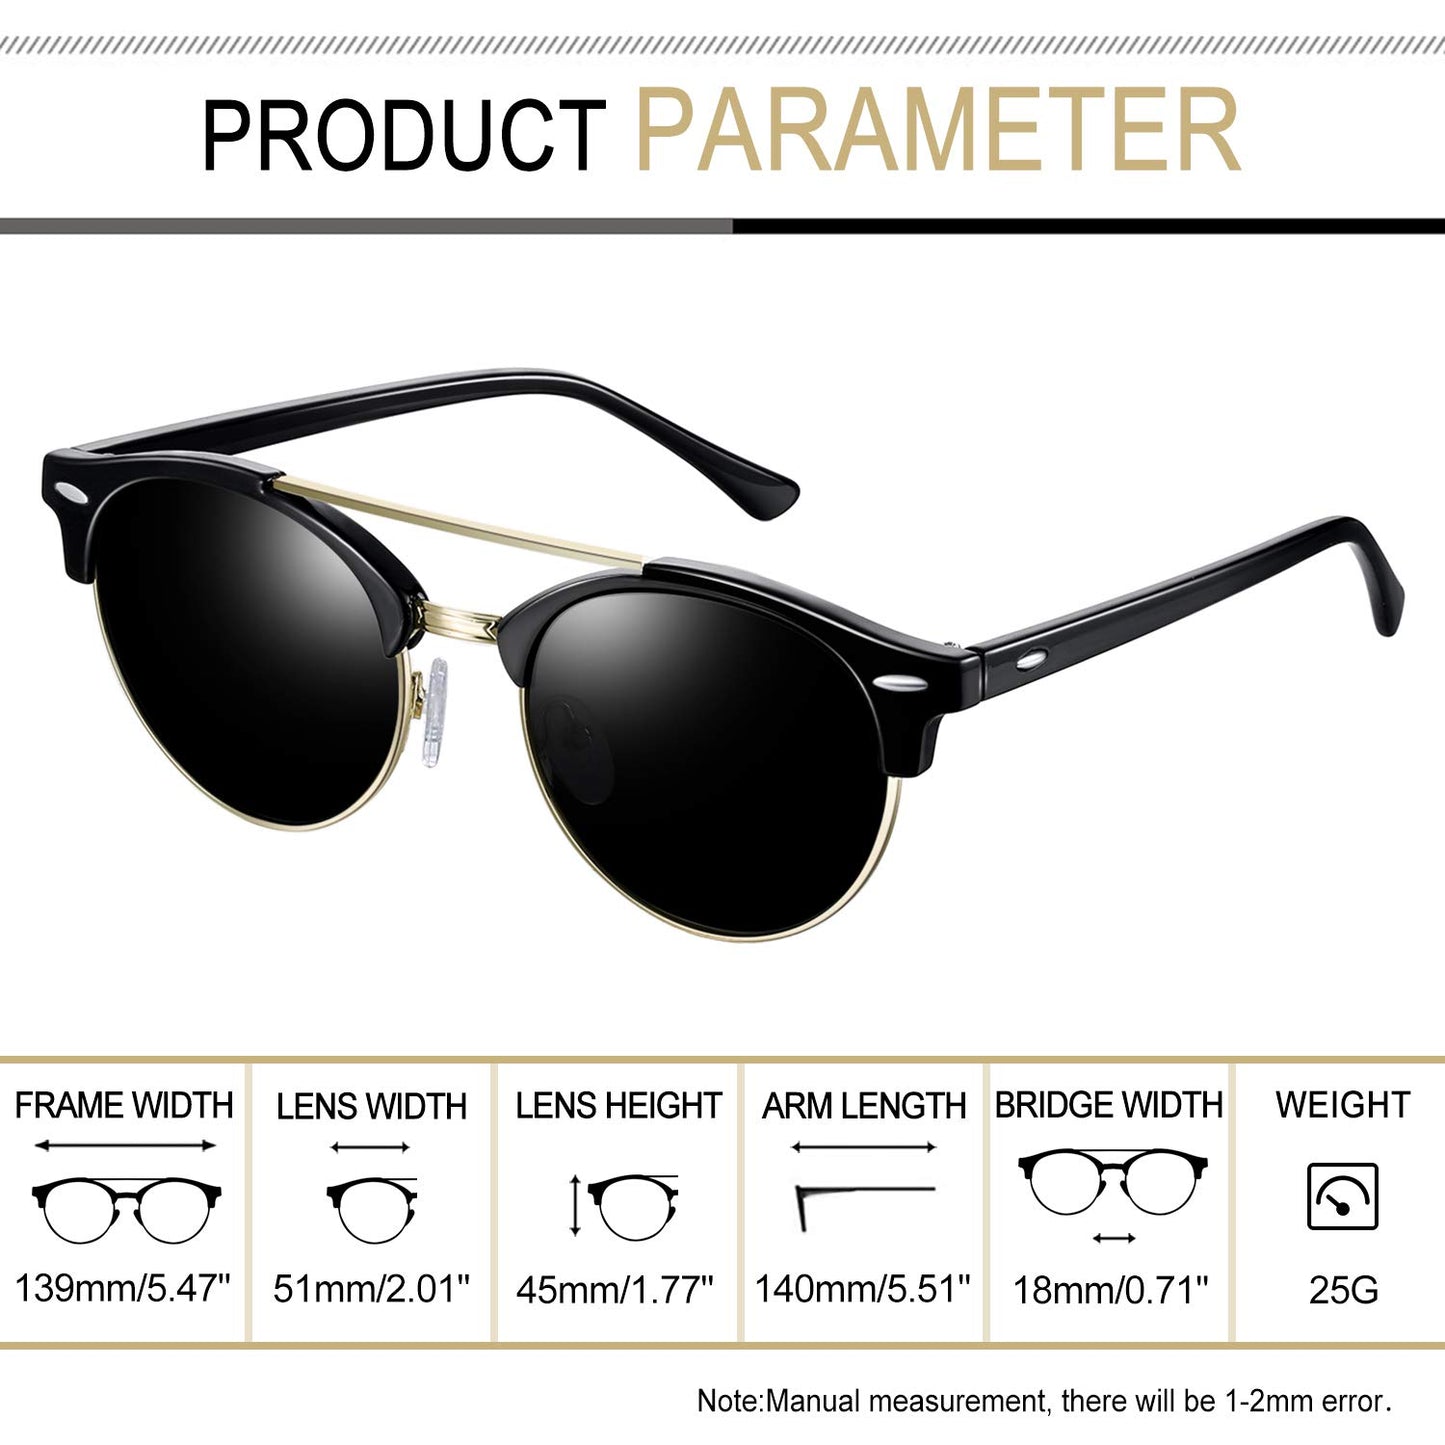 Joopin Polarized Semi Rimless Sunglasses Men Women, Classic Half Frame Sun Glasses UV400 Protection